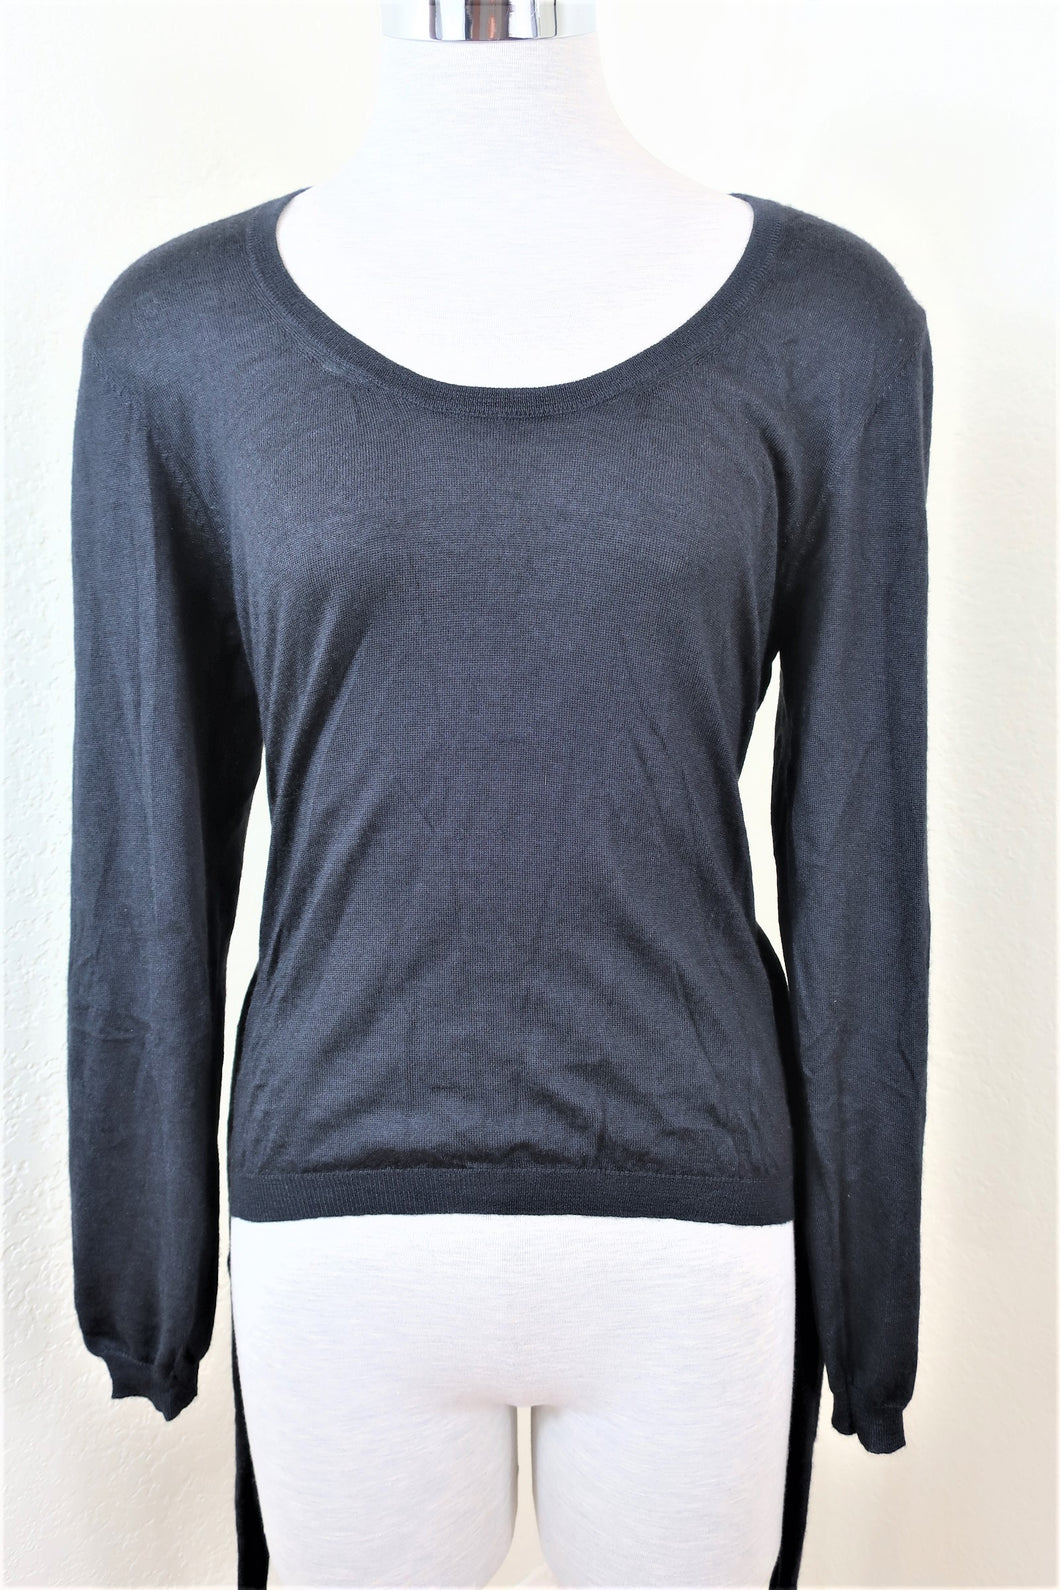 ETRO Black Cashmere Kasmere Silk Long Sleeve Top Blouse Sweater 44 Medium M Large 7 8 10